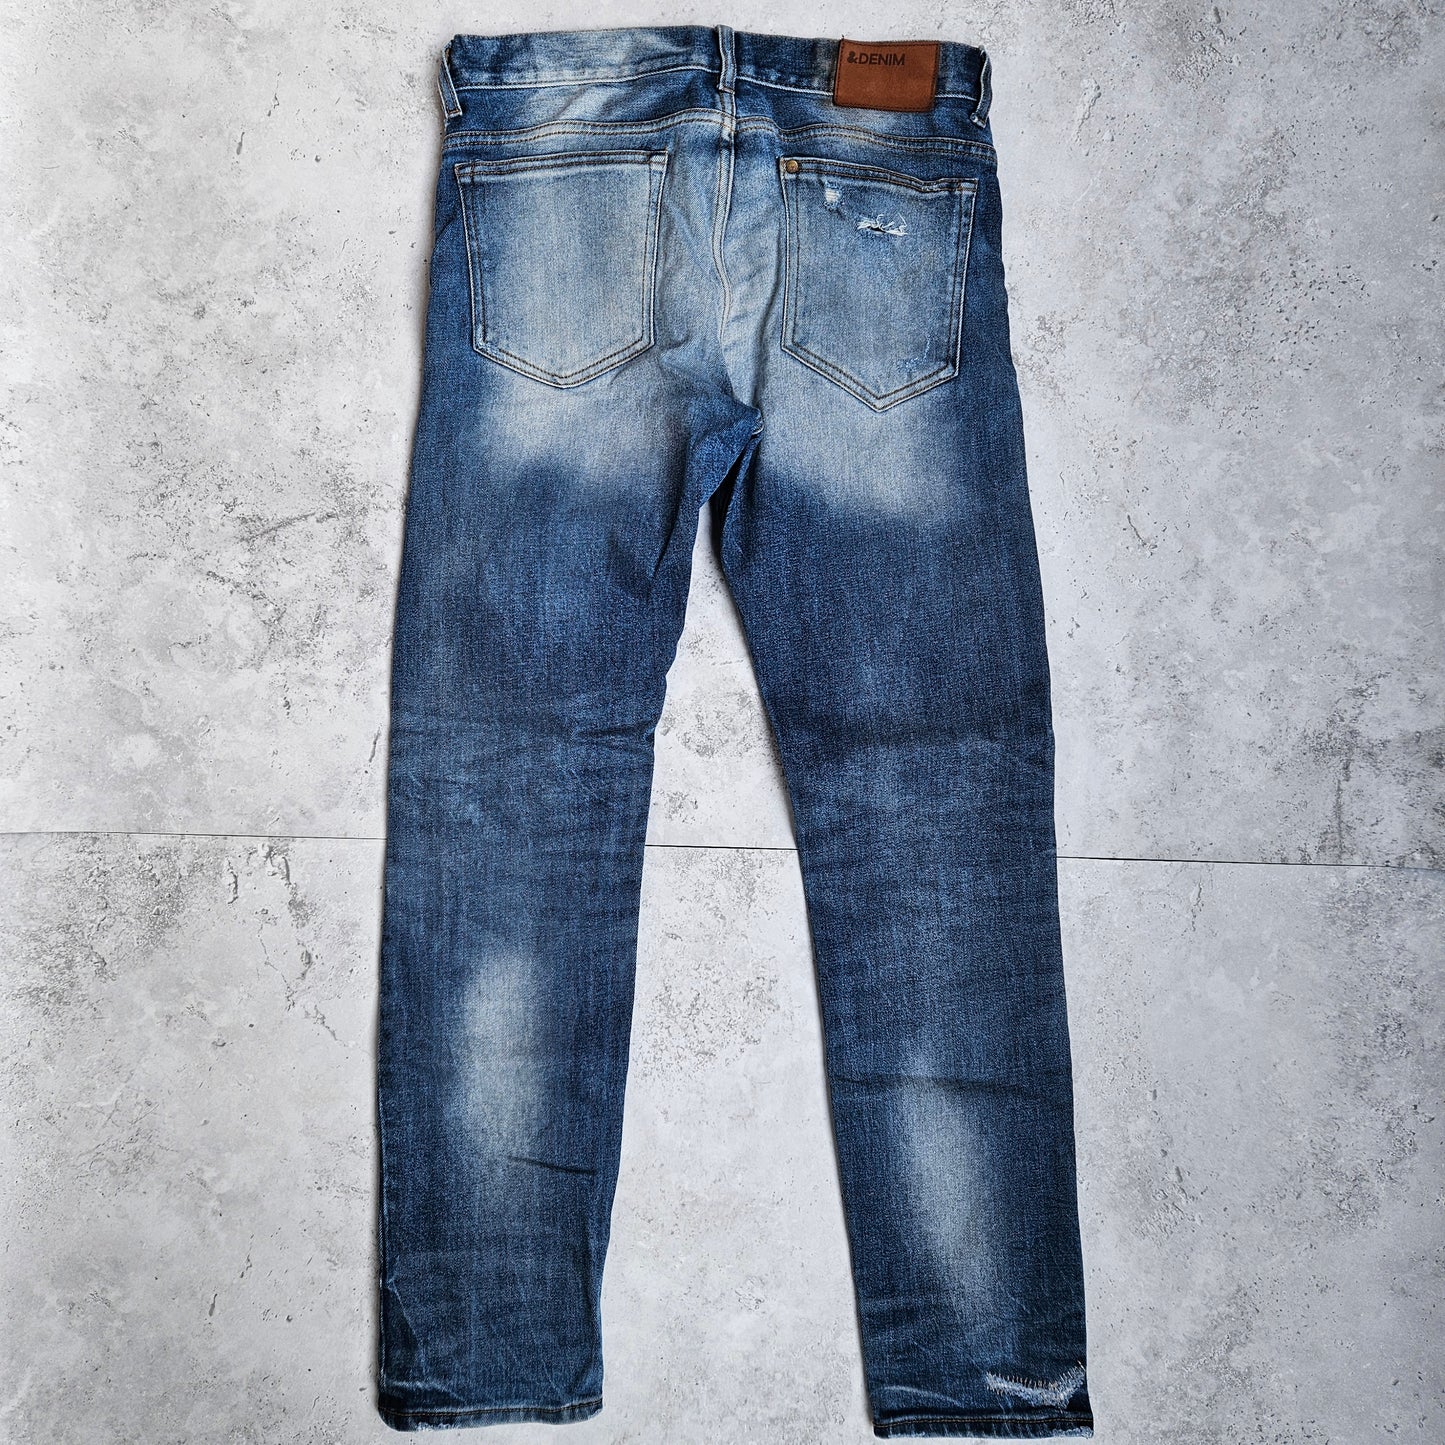 H&M Denim Jeans (30)